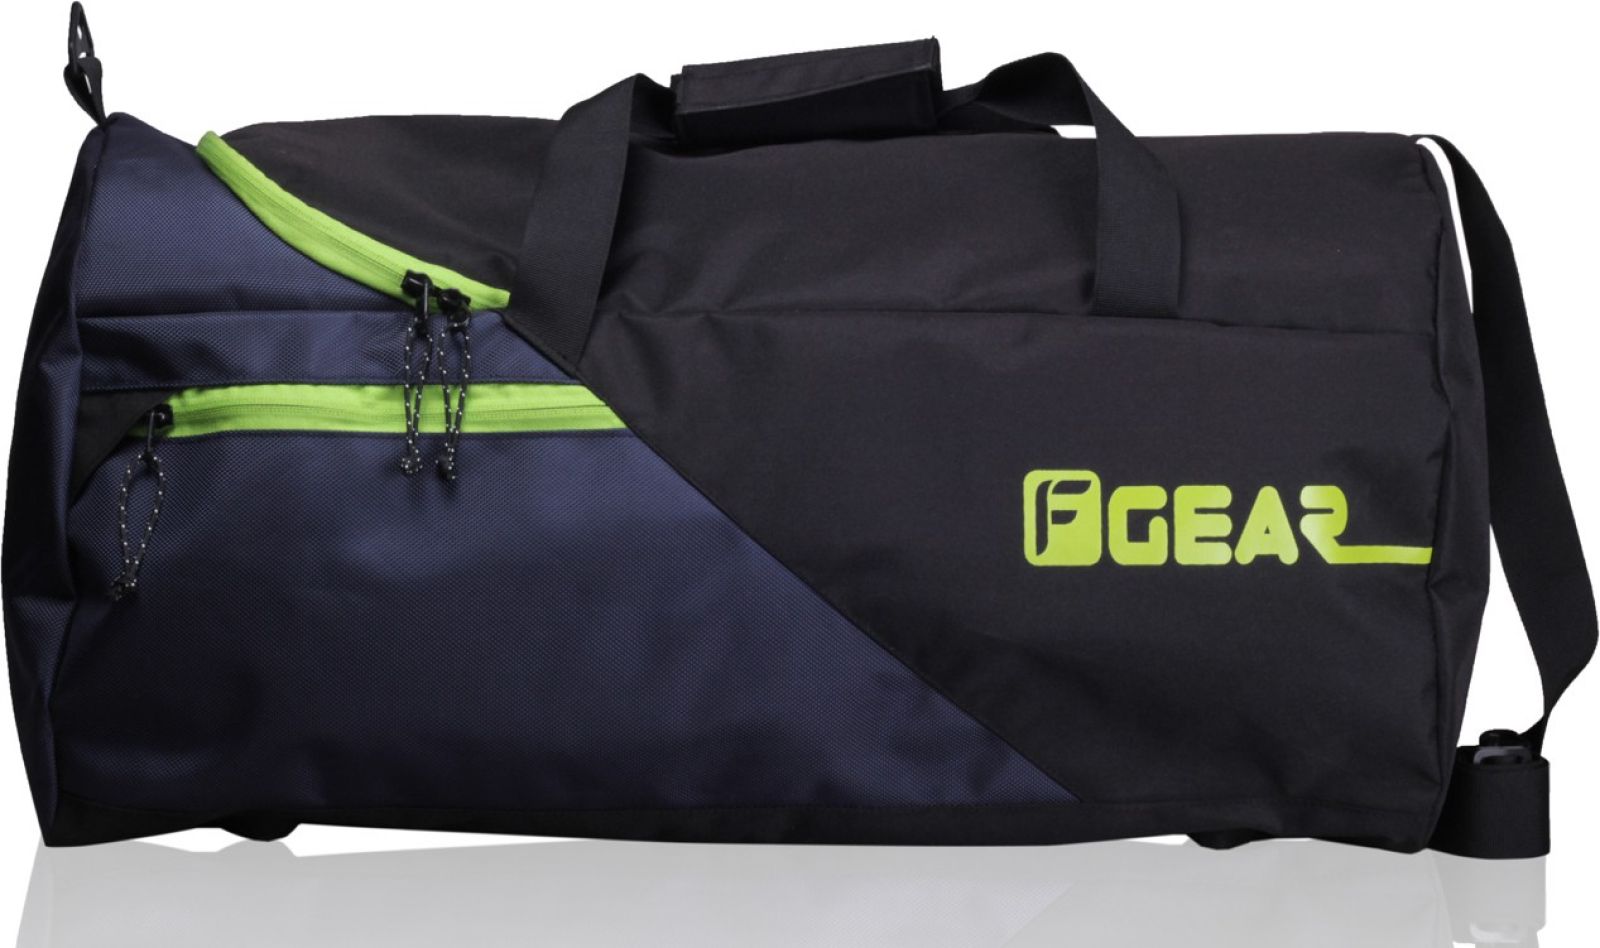 Flipkart: Buy Gear Explory 23 inch/59 cm Travel Duffel Bag (Black, Green) at Rs 488 only